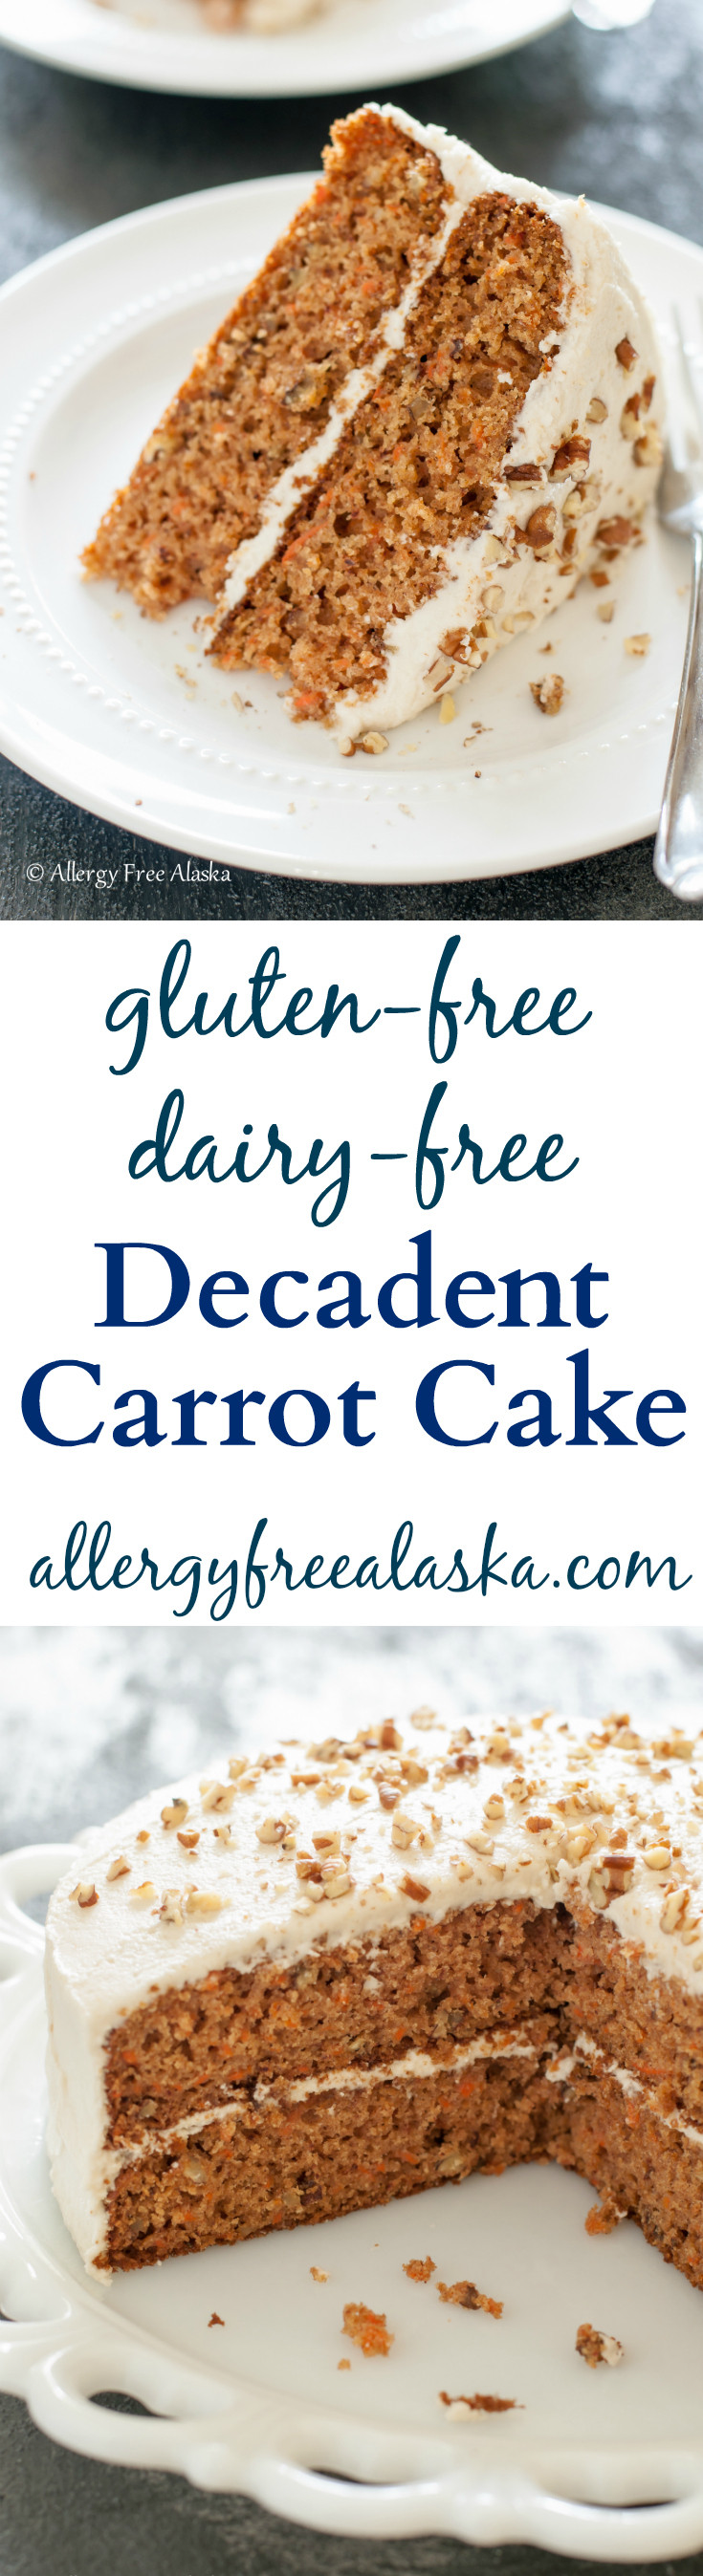 Gluten Free Dairy Free Carrot Cake
 Gluten Free Dairy Free Decadent Carrot Cake Allergy Free